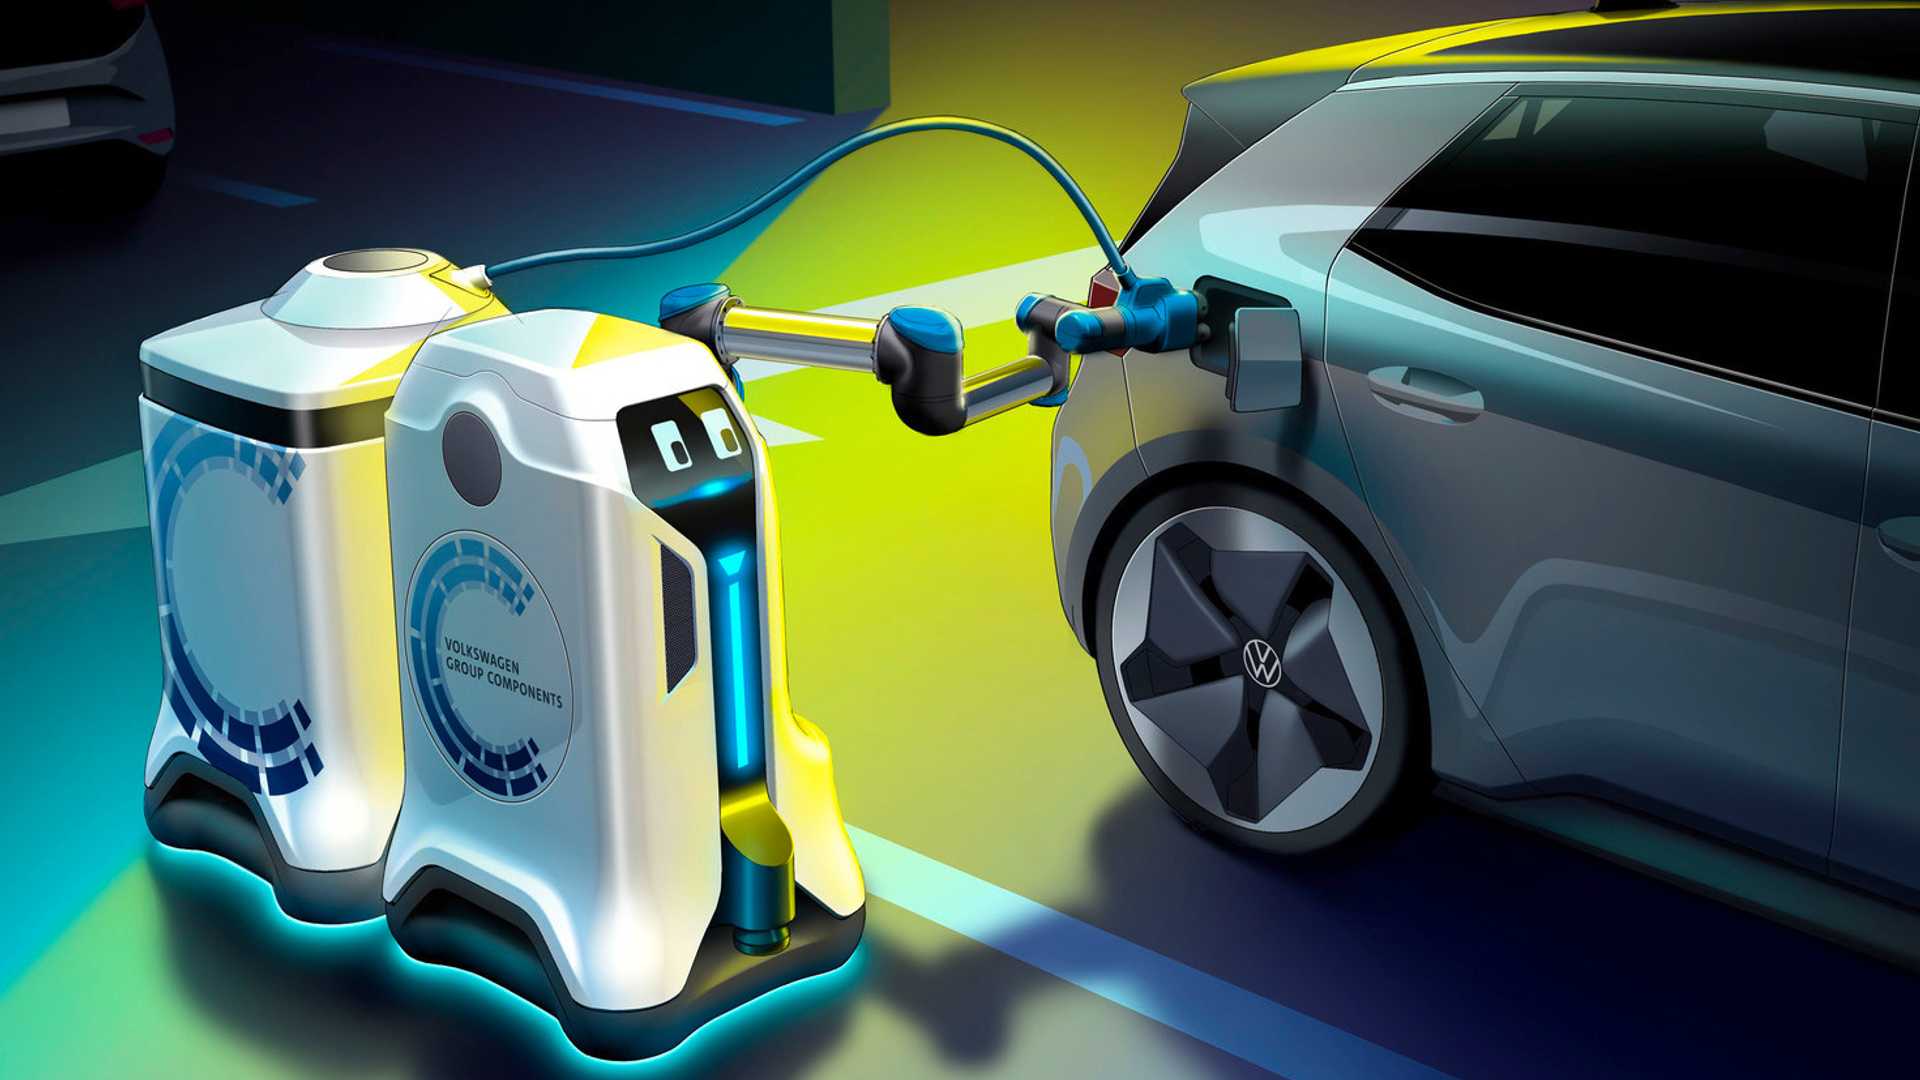 VW robot mobile charging